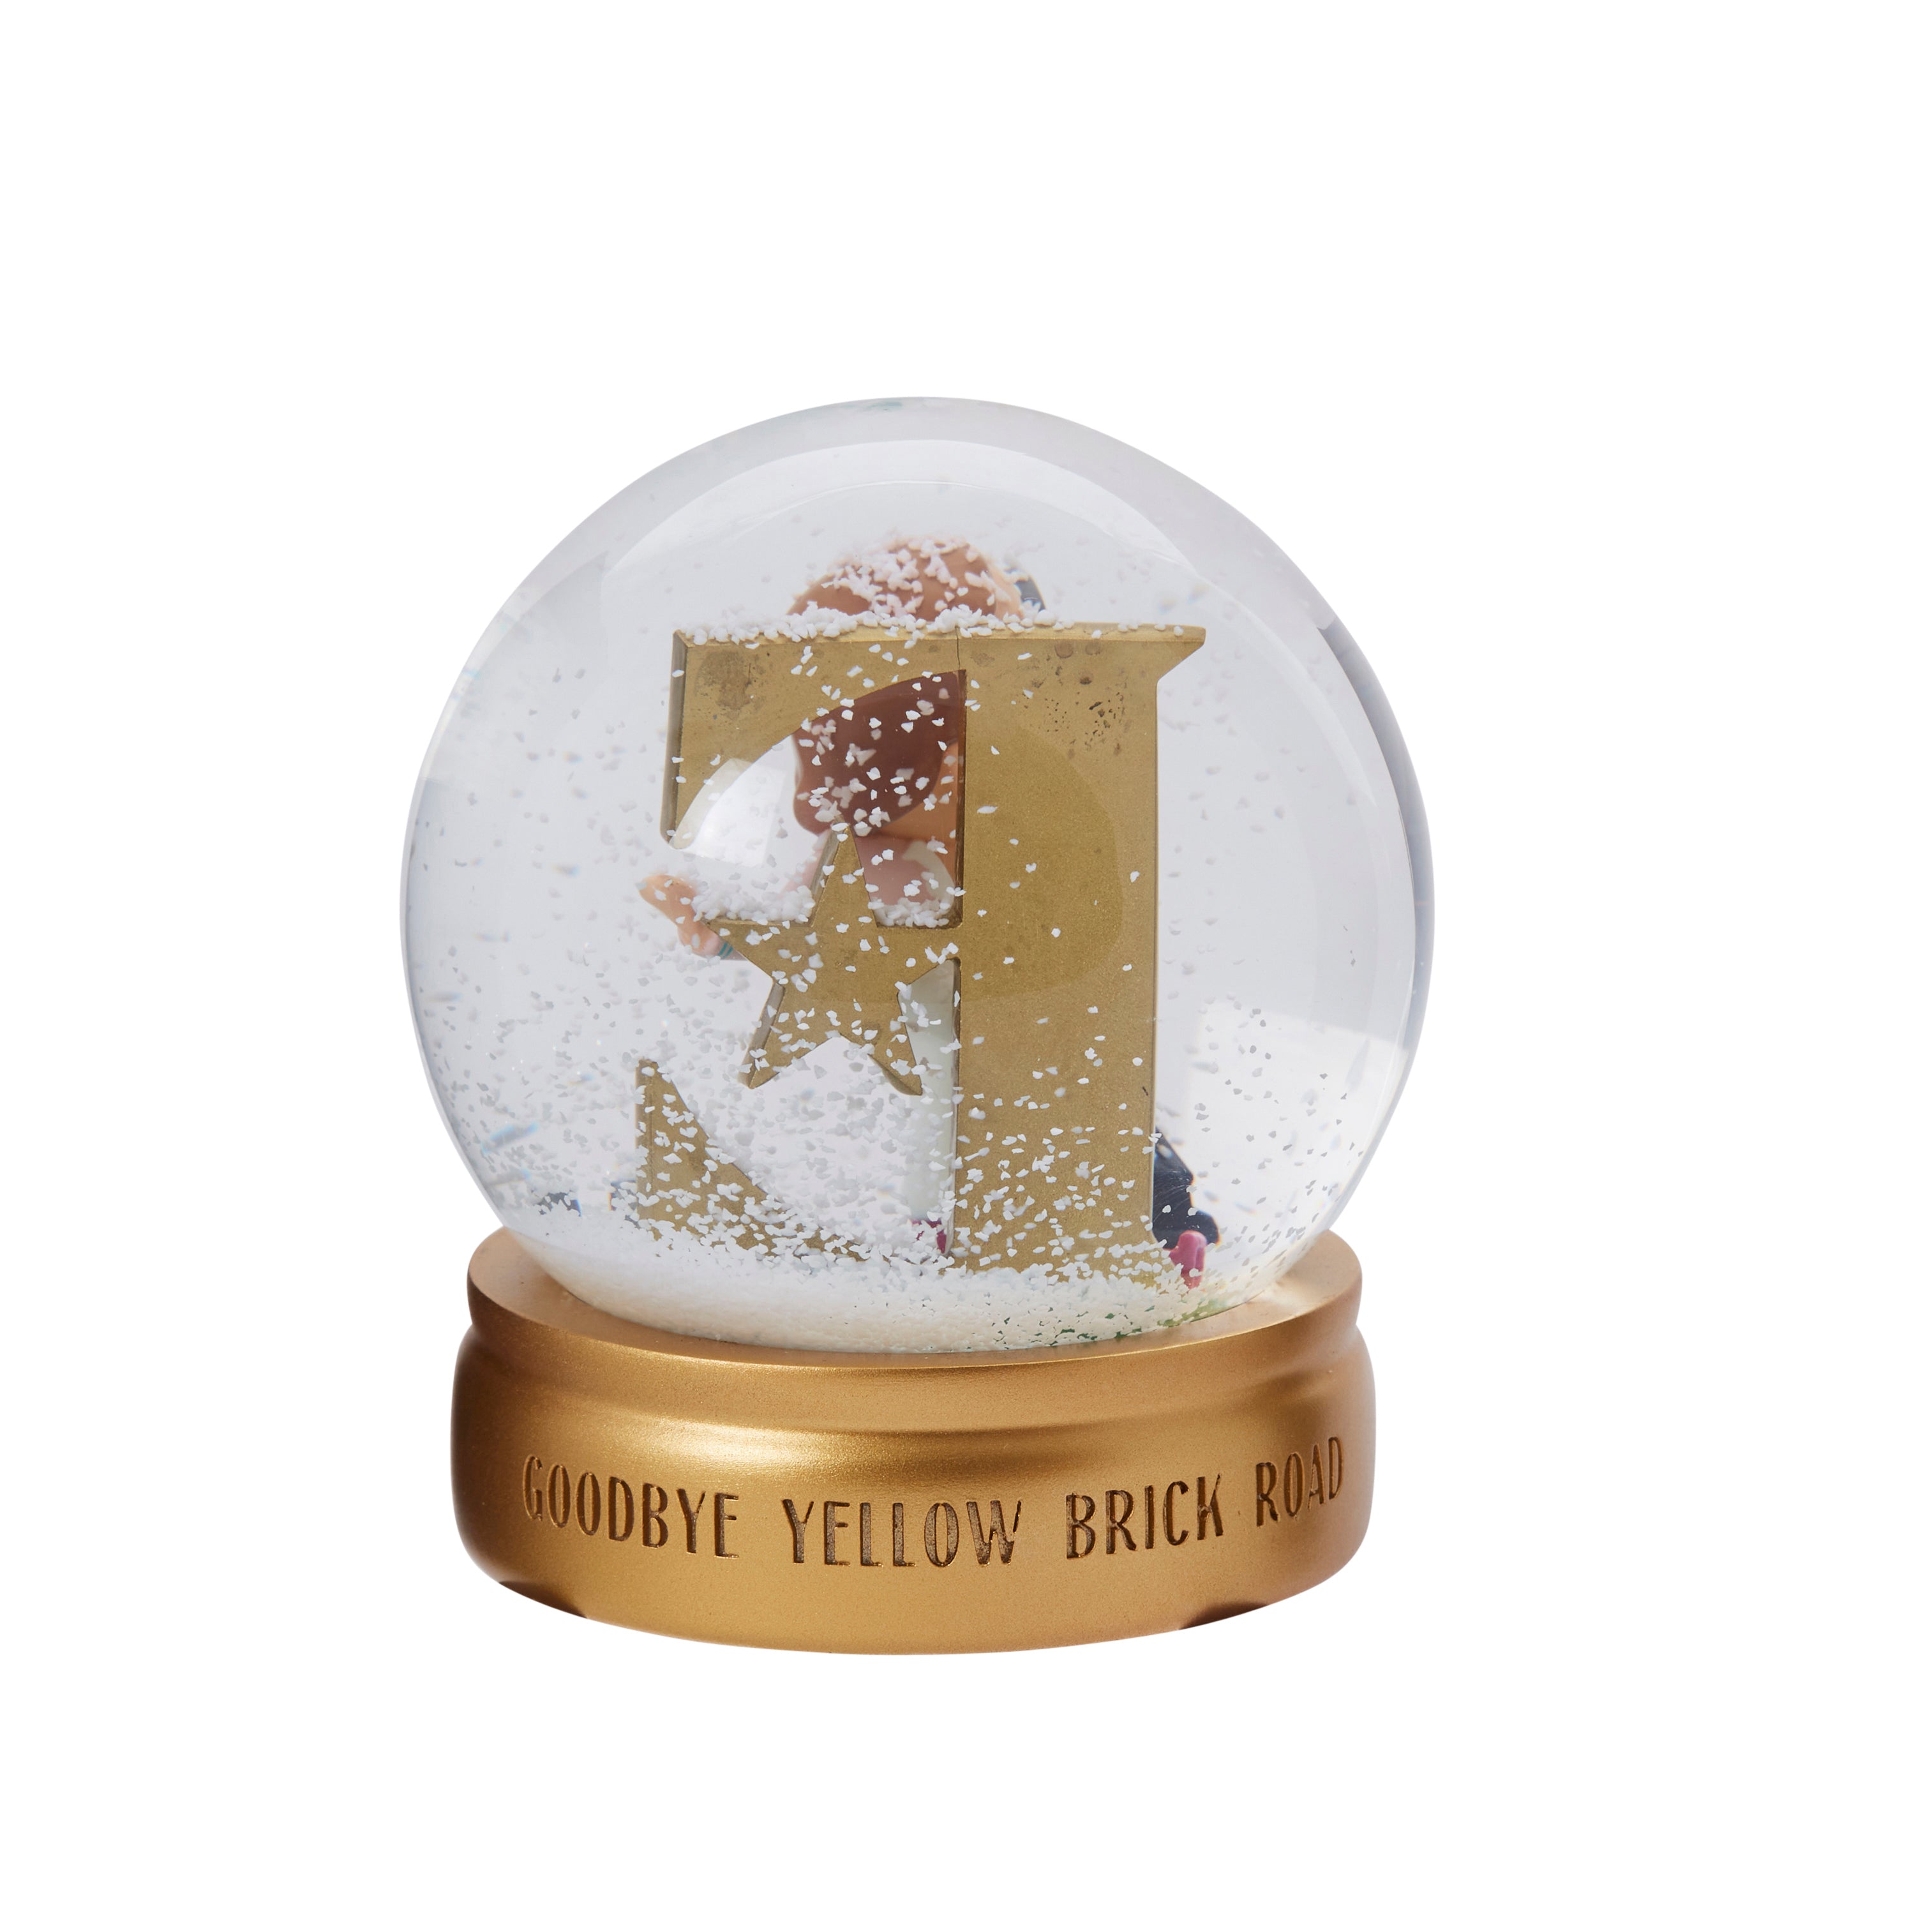 Elton John - Limited Edition Commemorative Snow Globe